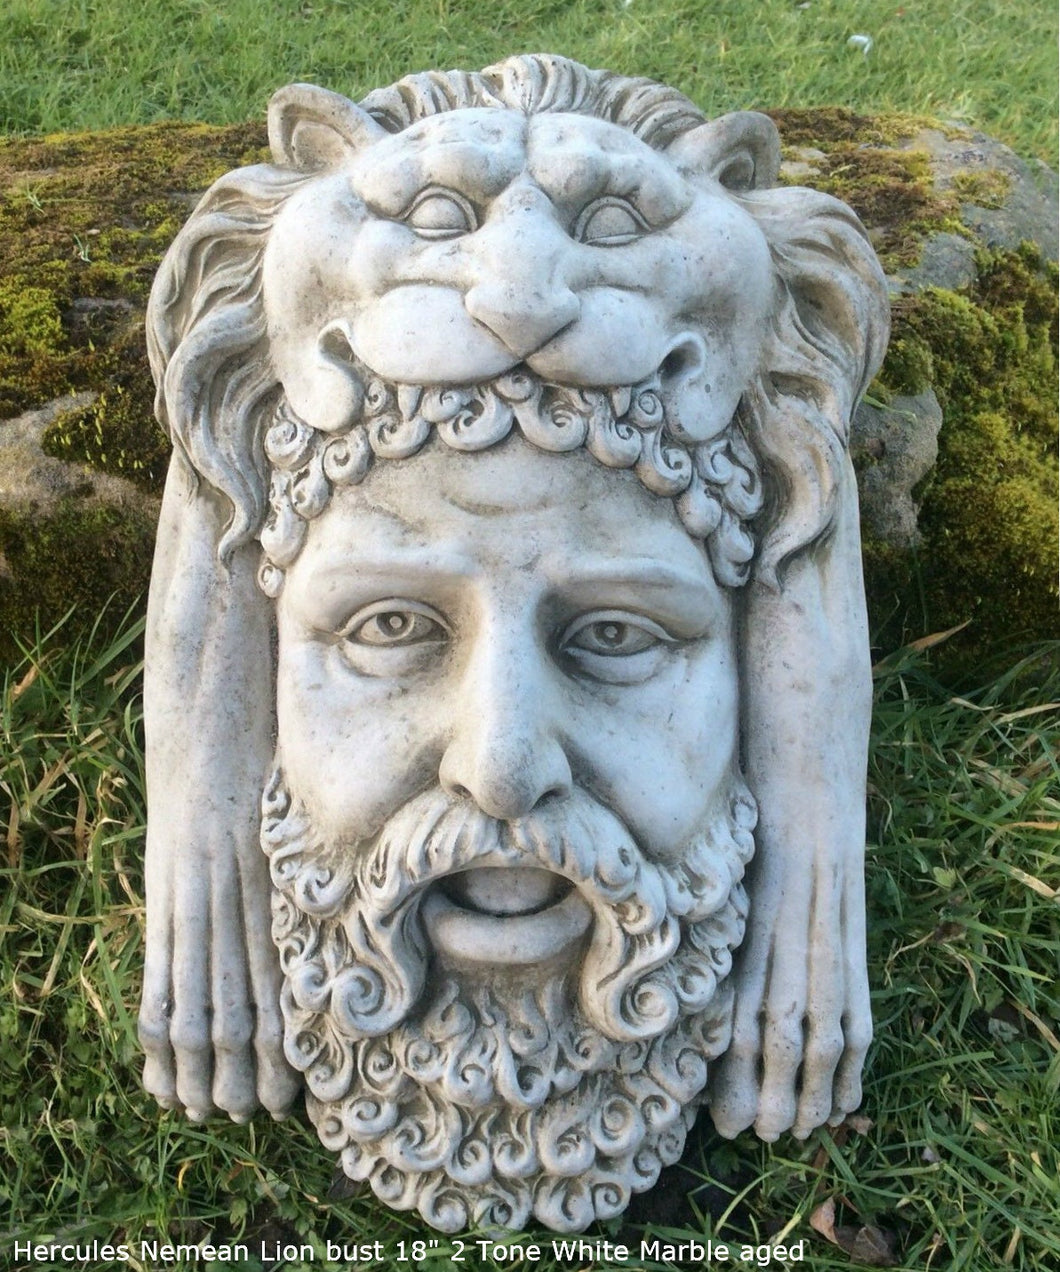 Hercules and The Nemean Lion bust Sculpture 18